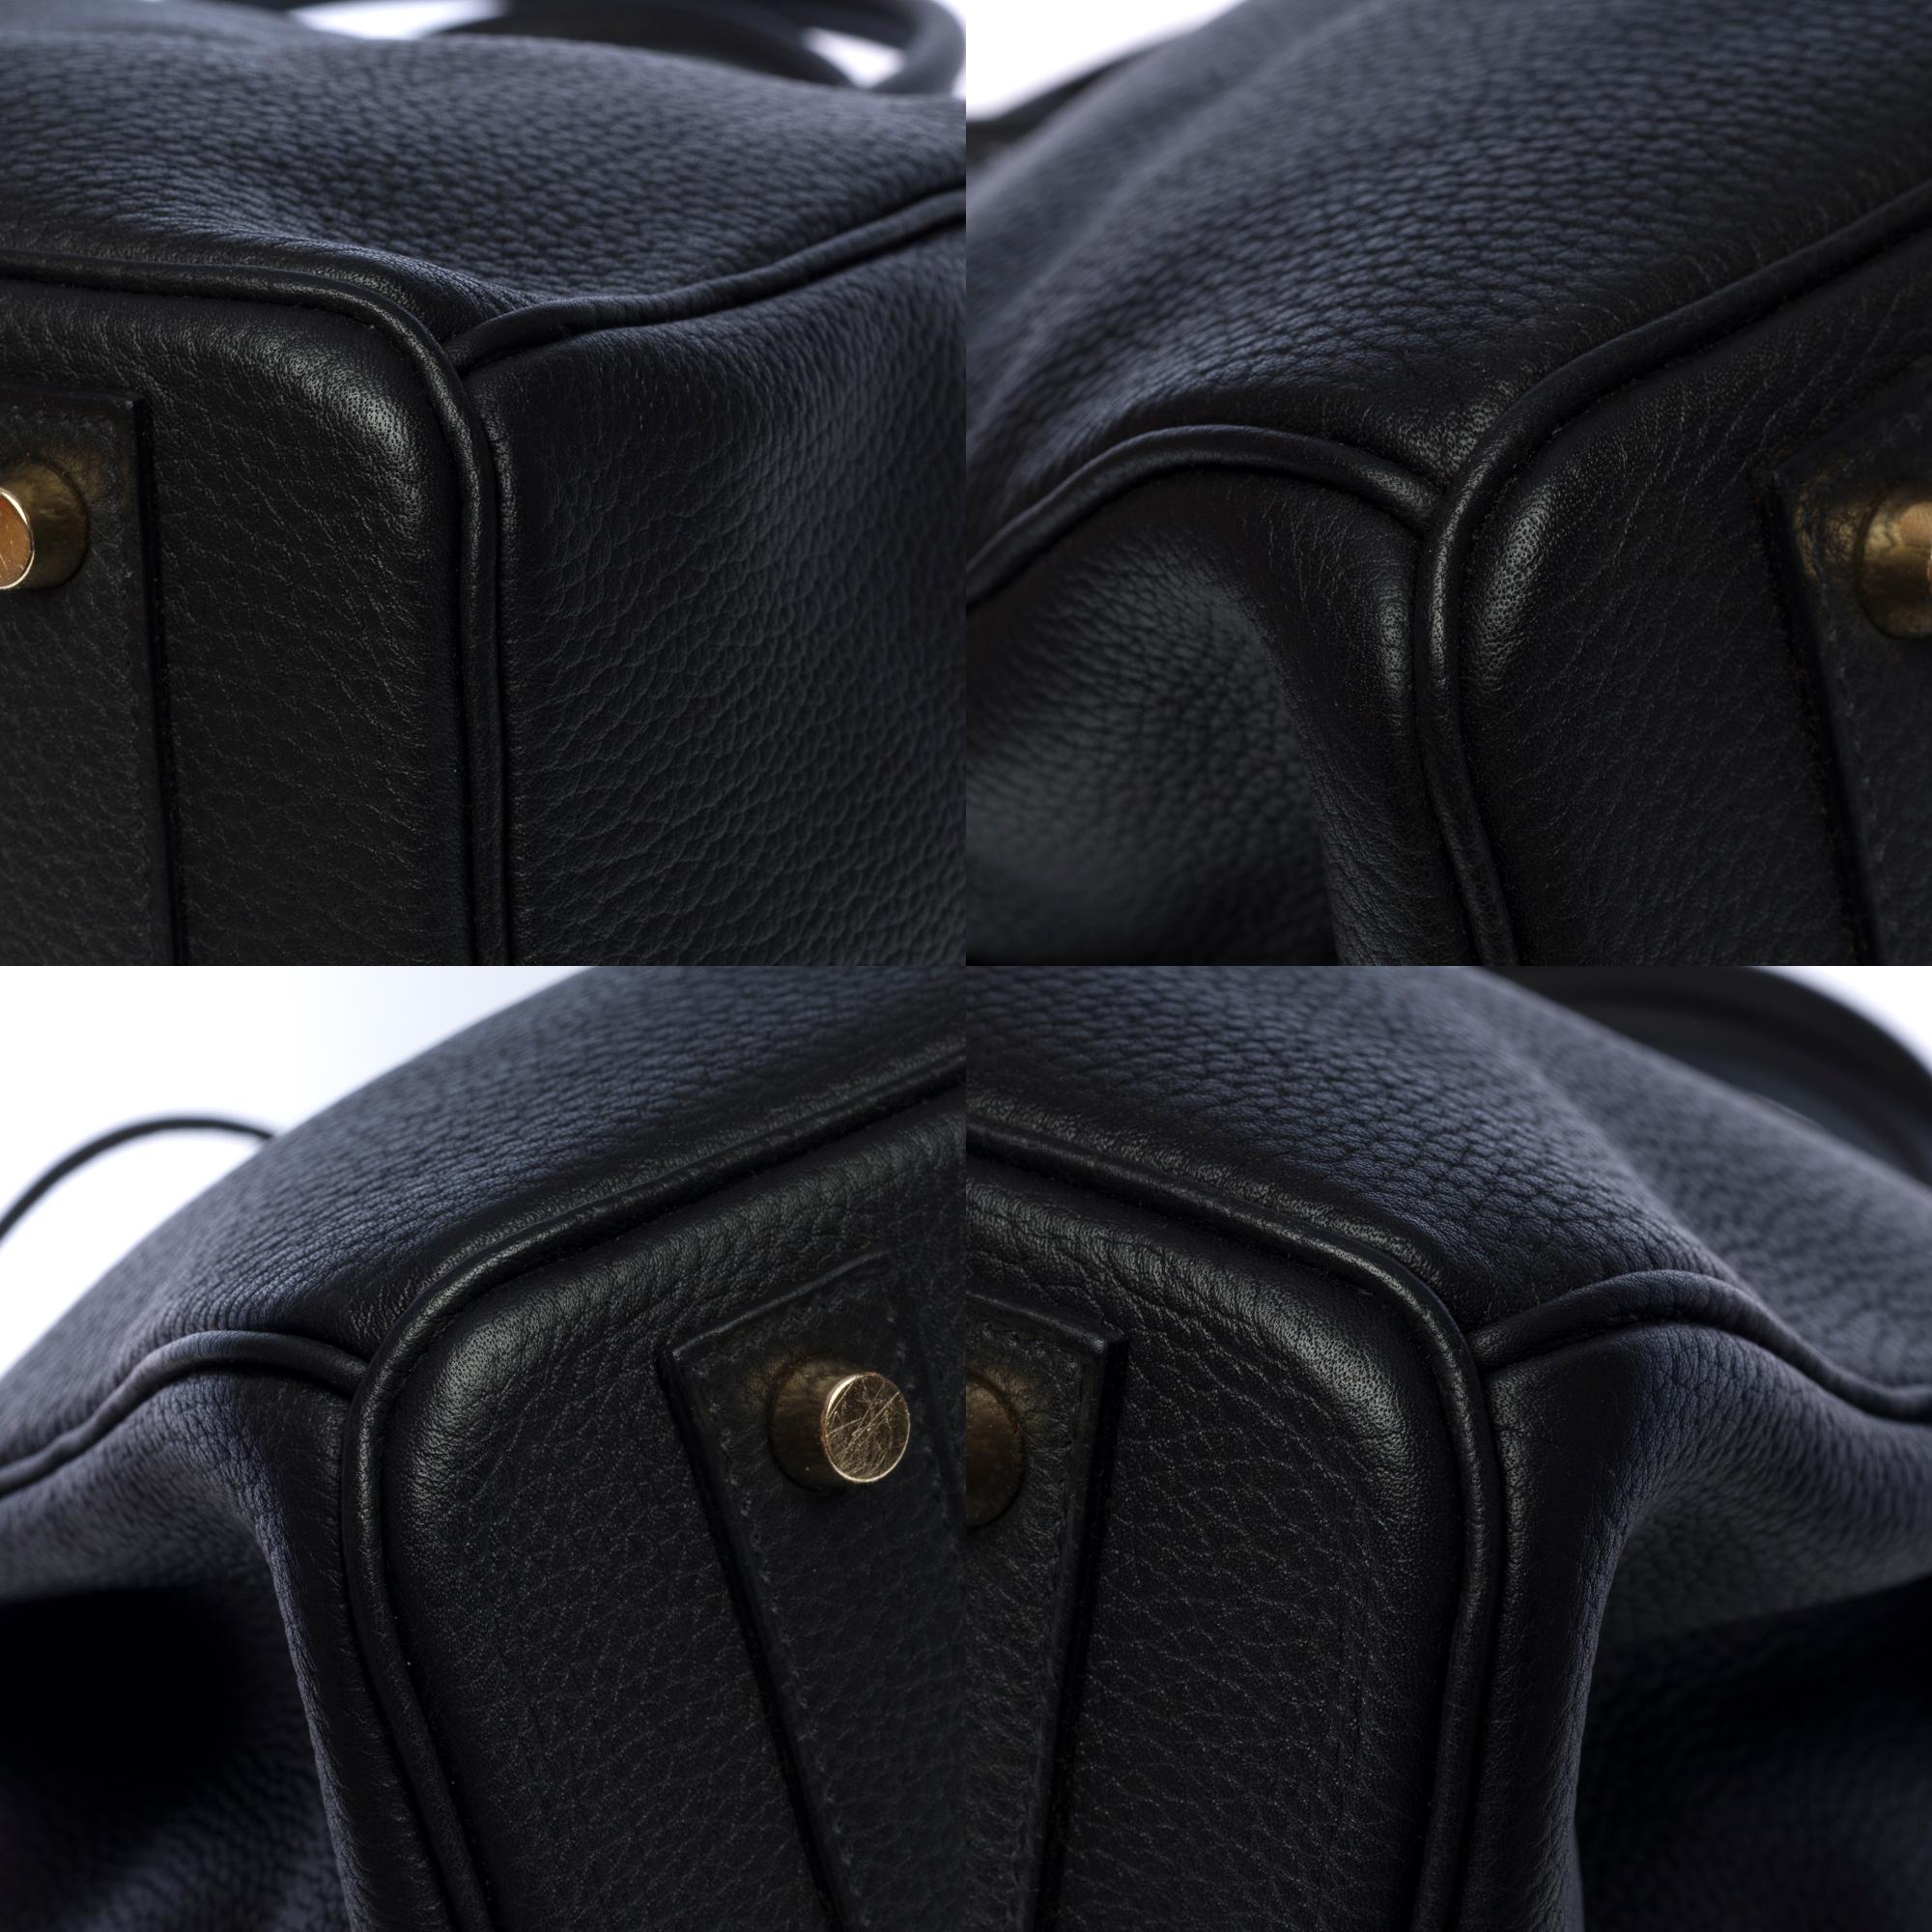 Stunning Hermes Birkin 40cm handbag in Black Togo leather, GHW 7